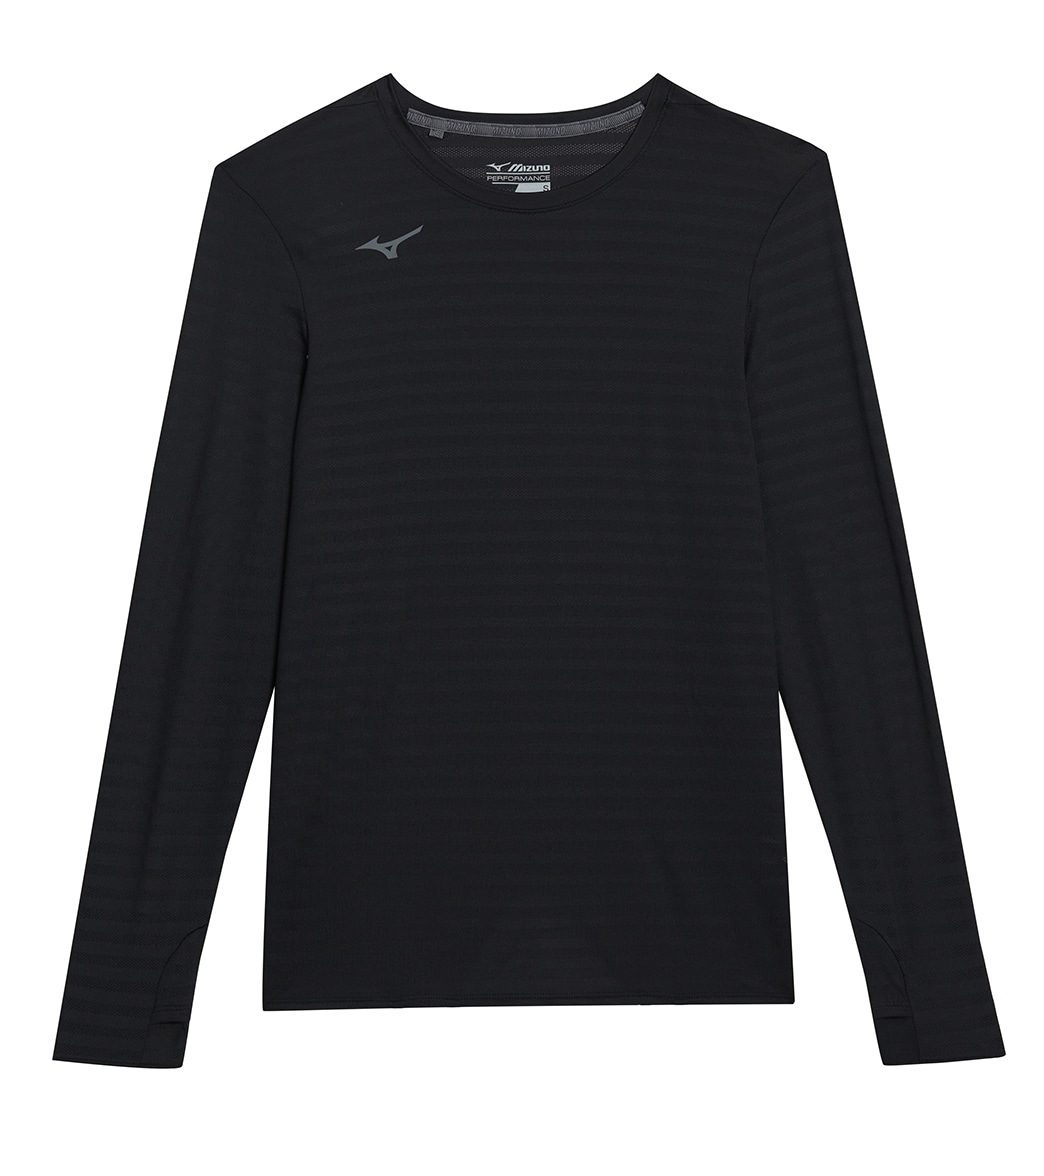 Mizuno Men's Athletic Eco Long Sleeve Top Shirt - Black Large - Swimoutlet.com